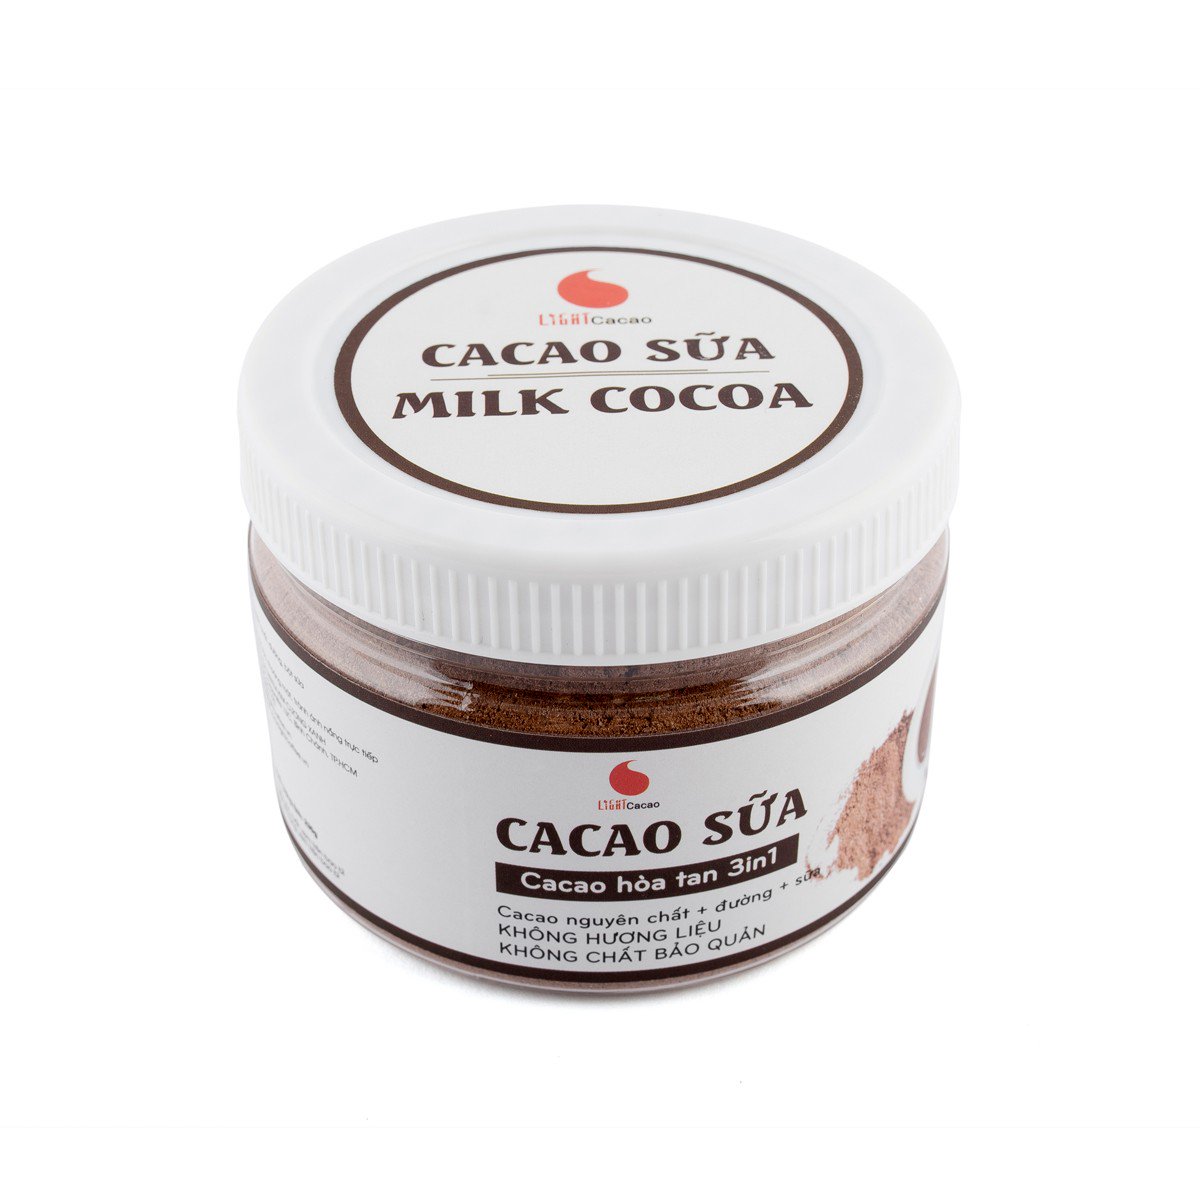 Cacao sữa 3in1 thơm ngon, tiện lợi Light Cacao - hũ 230g